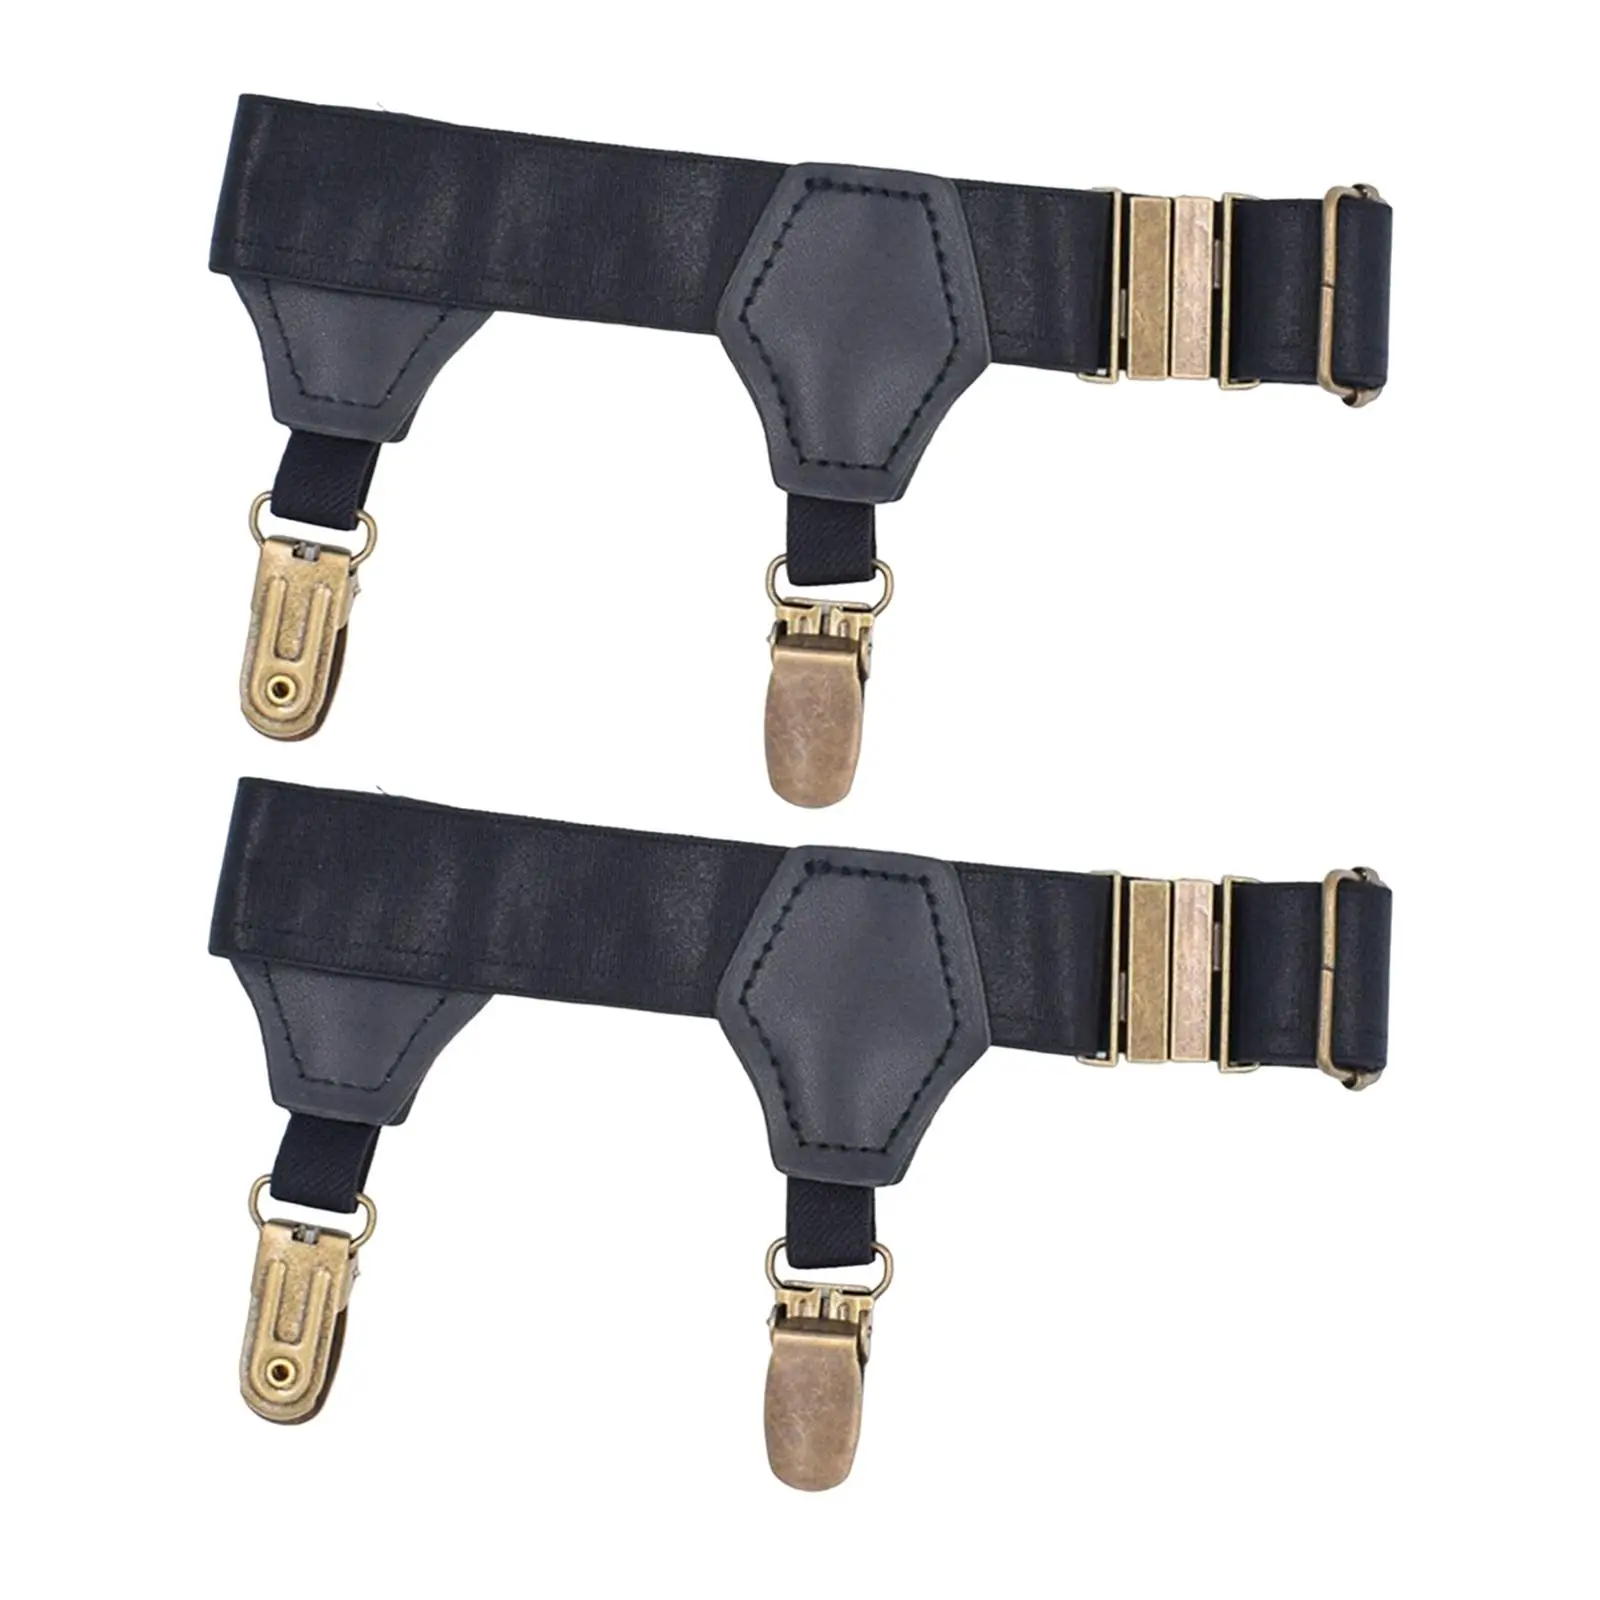 1Pair Stocking Suspender Elastic Adjustable Stays Holders Non Slip 